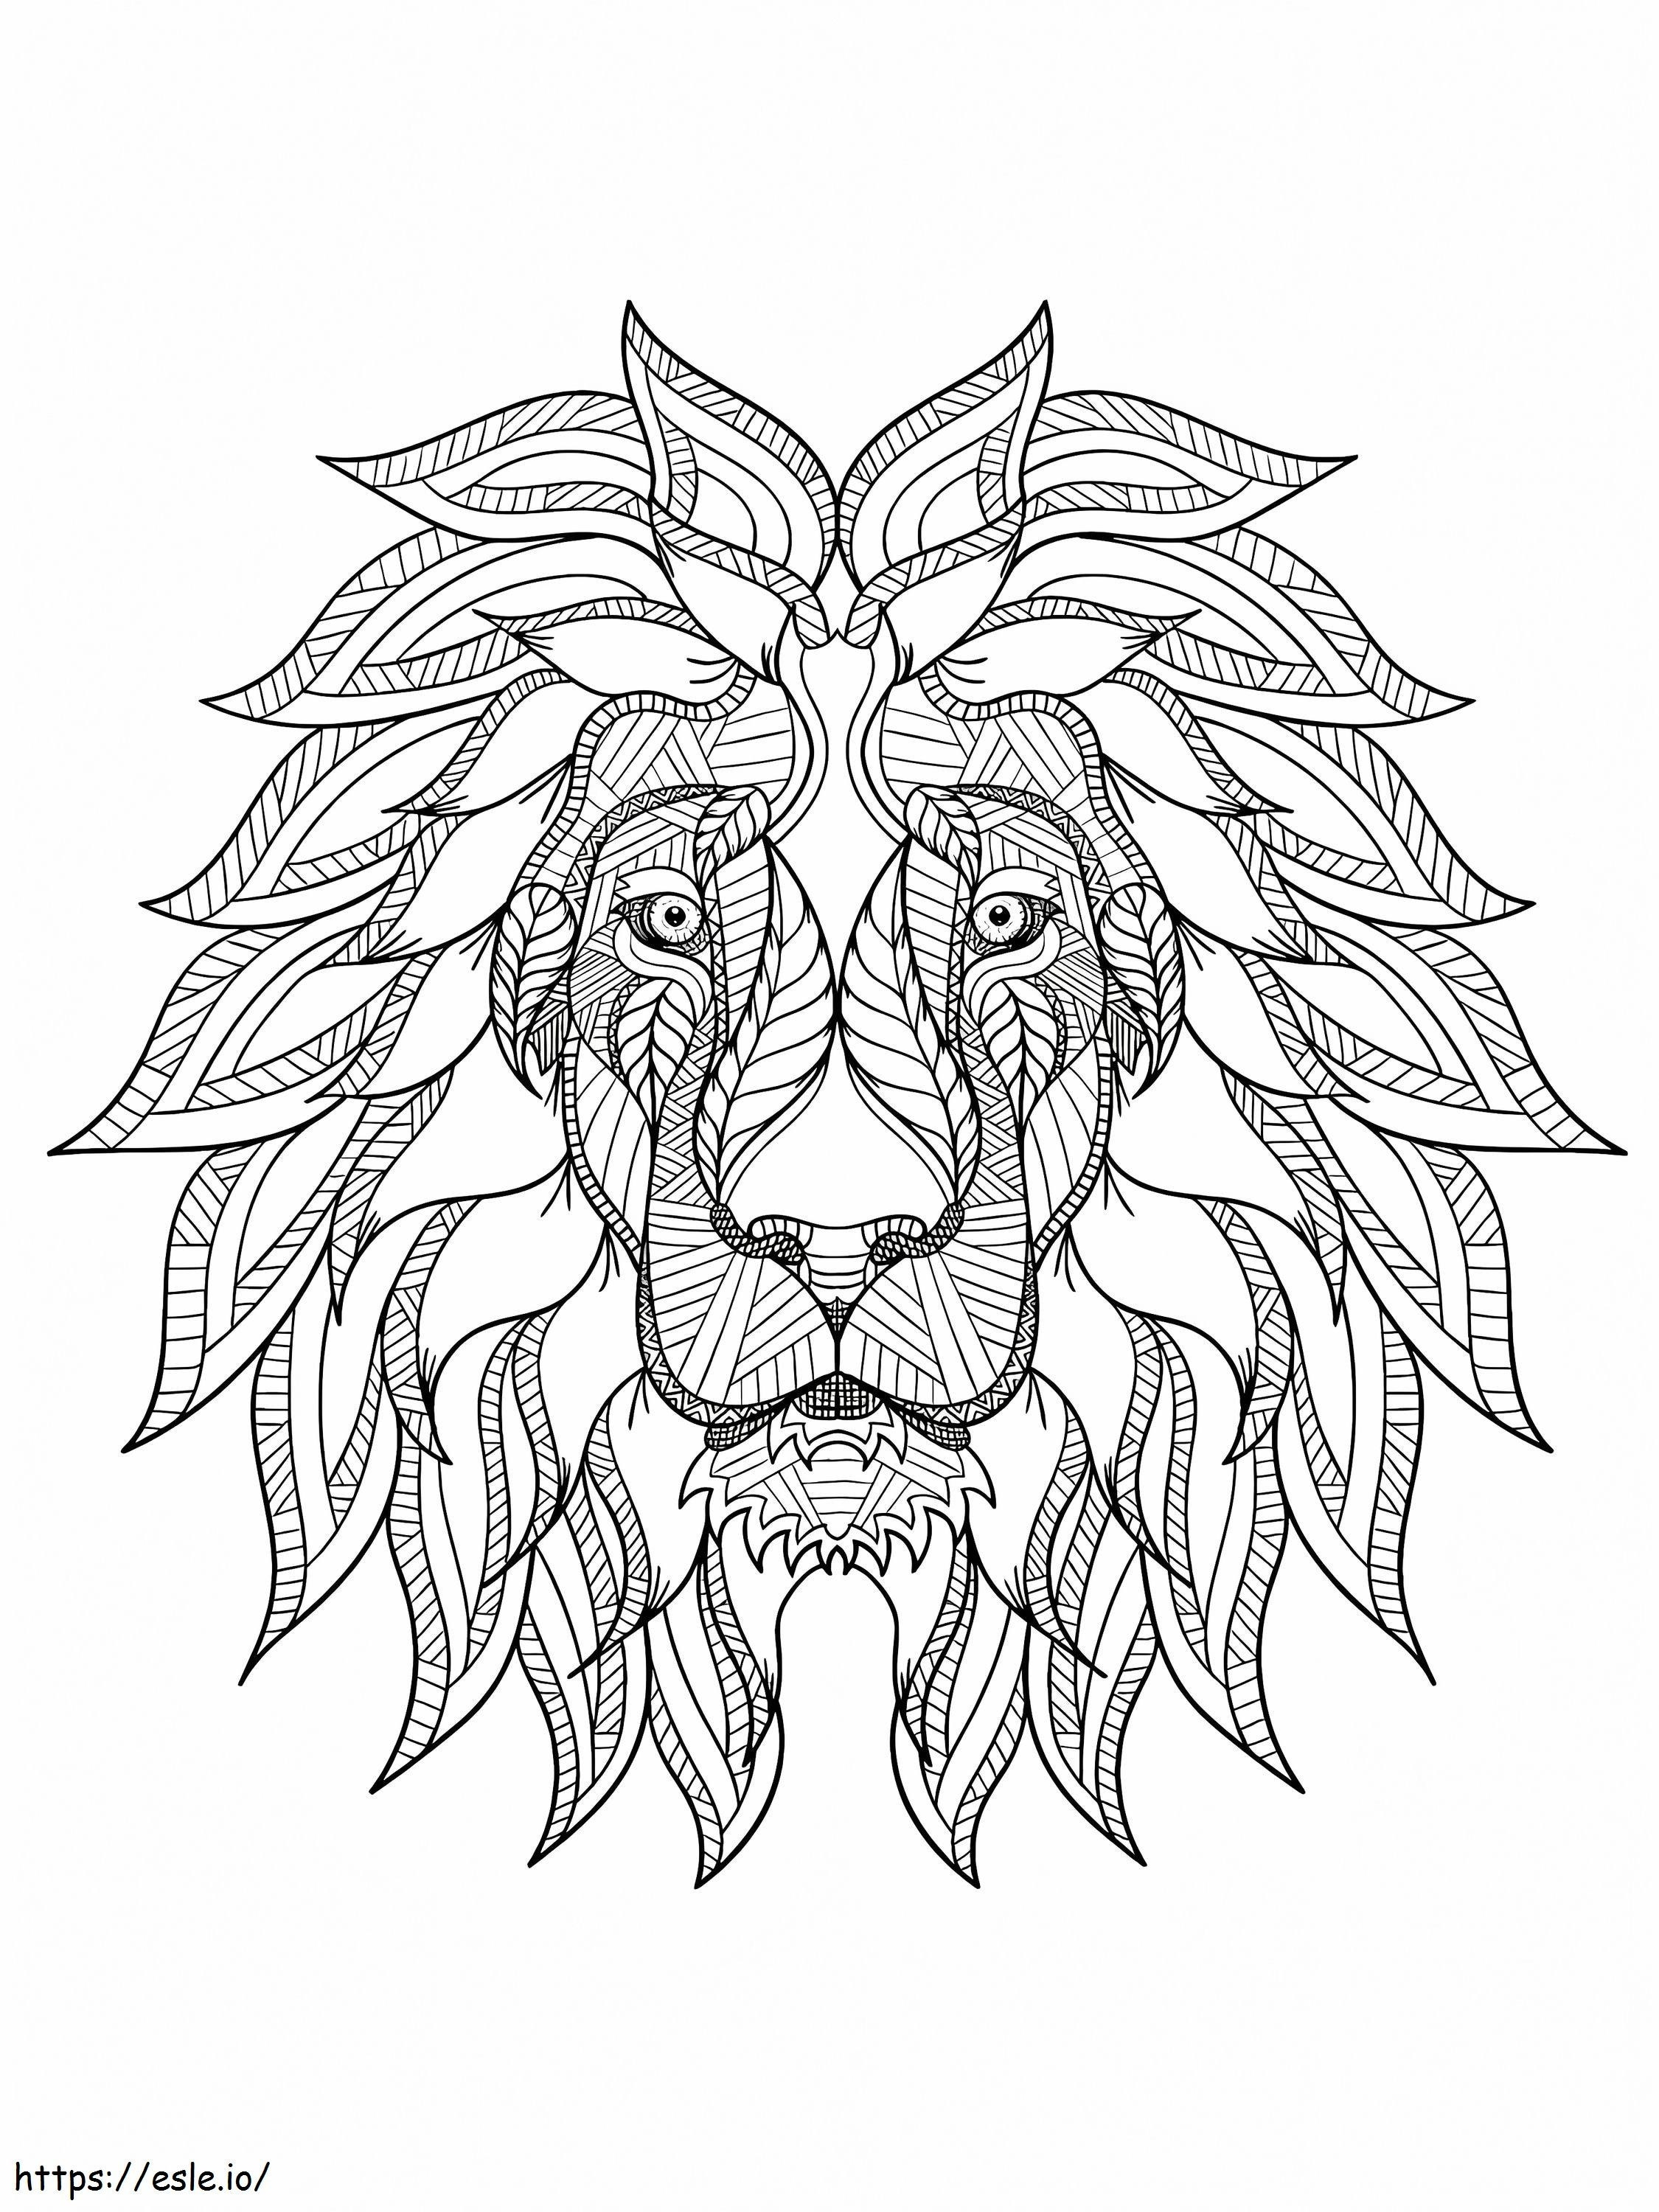 Wonderful Lion Face coloring page